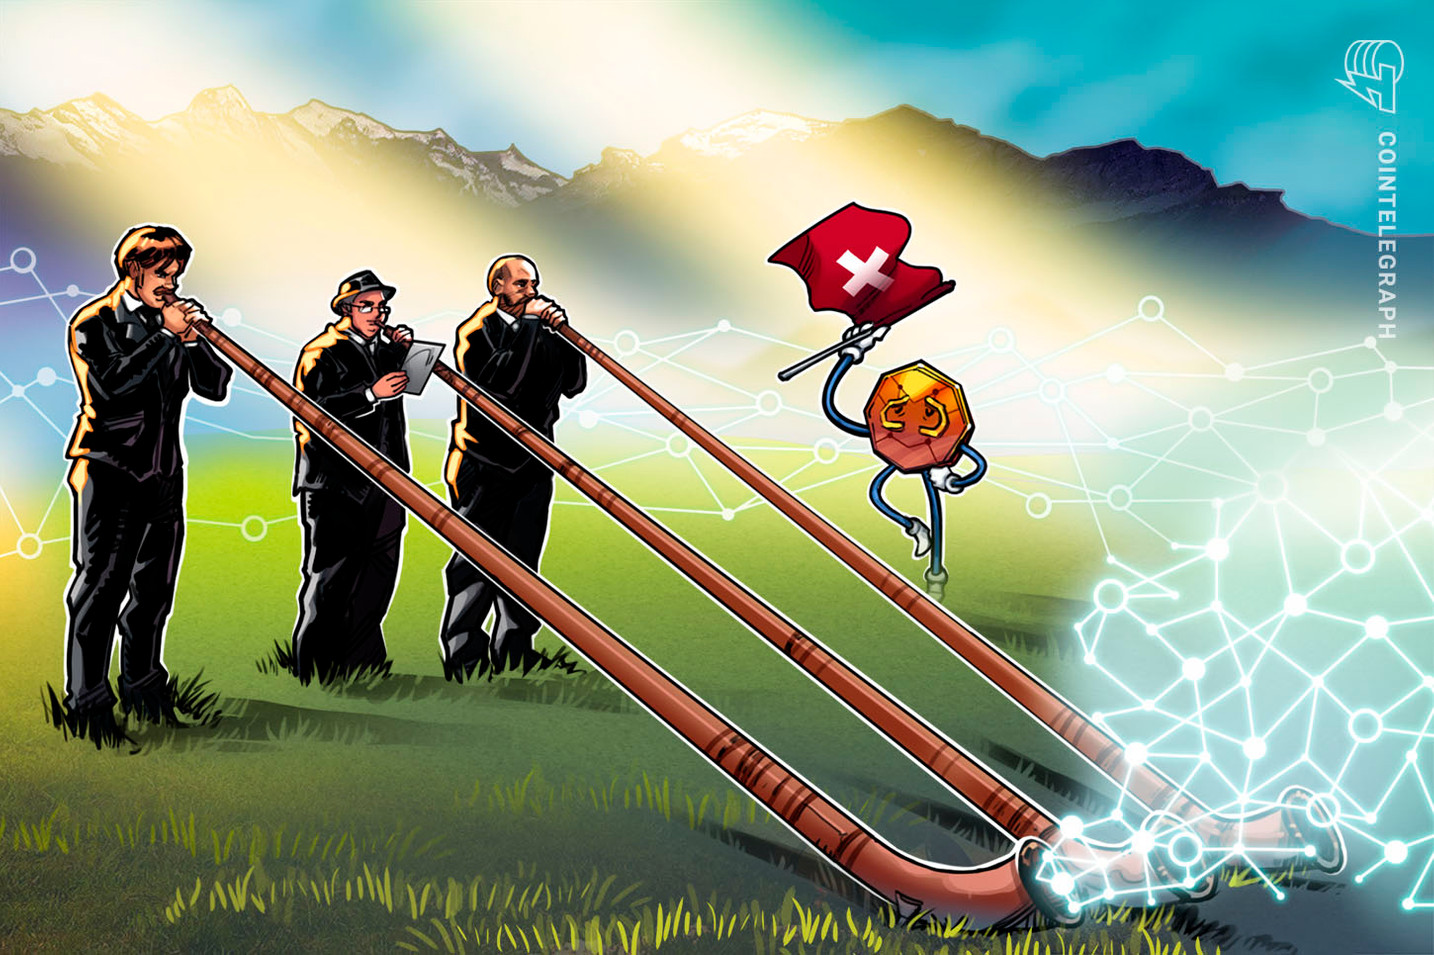 ddrrhhkk - قوانین جدید در سوئیس، بازار بلاک چین و ارز دیجیتال را استحکام بخشید